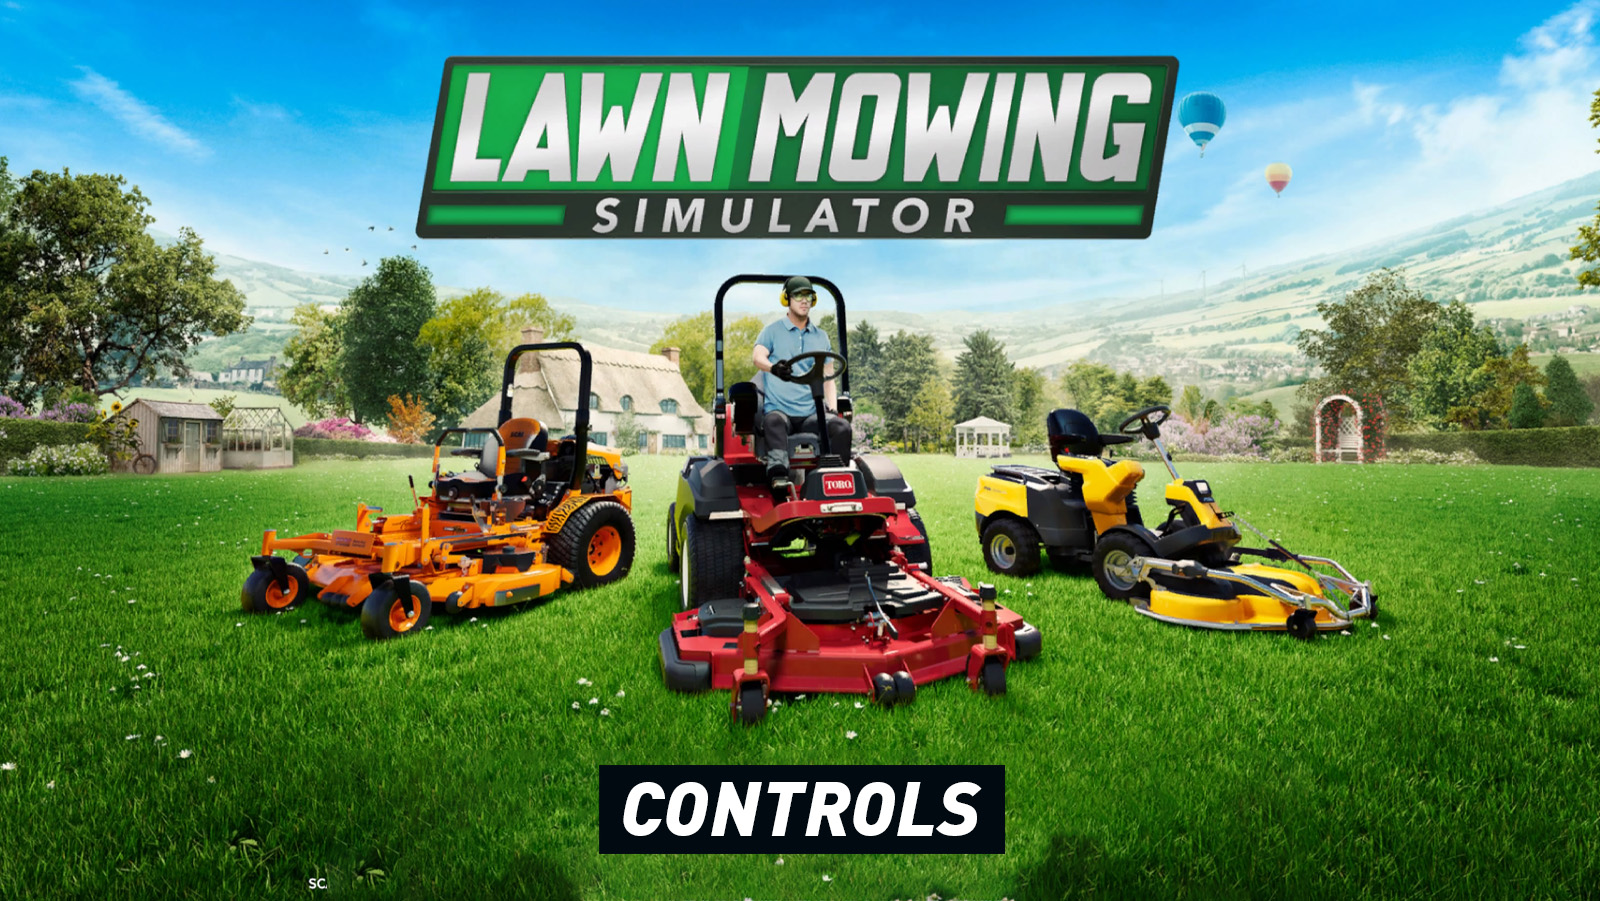 Lawn Mowing Simulator Controls